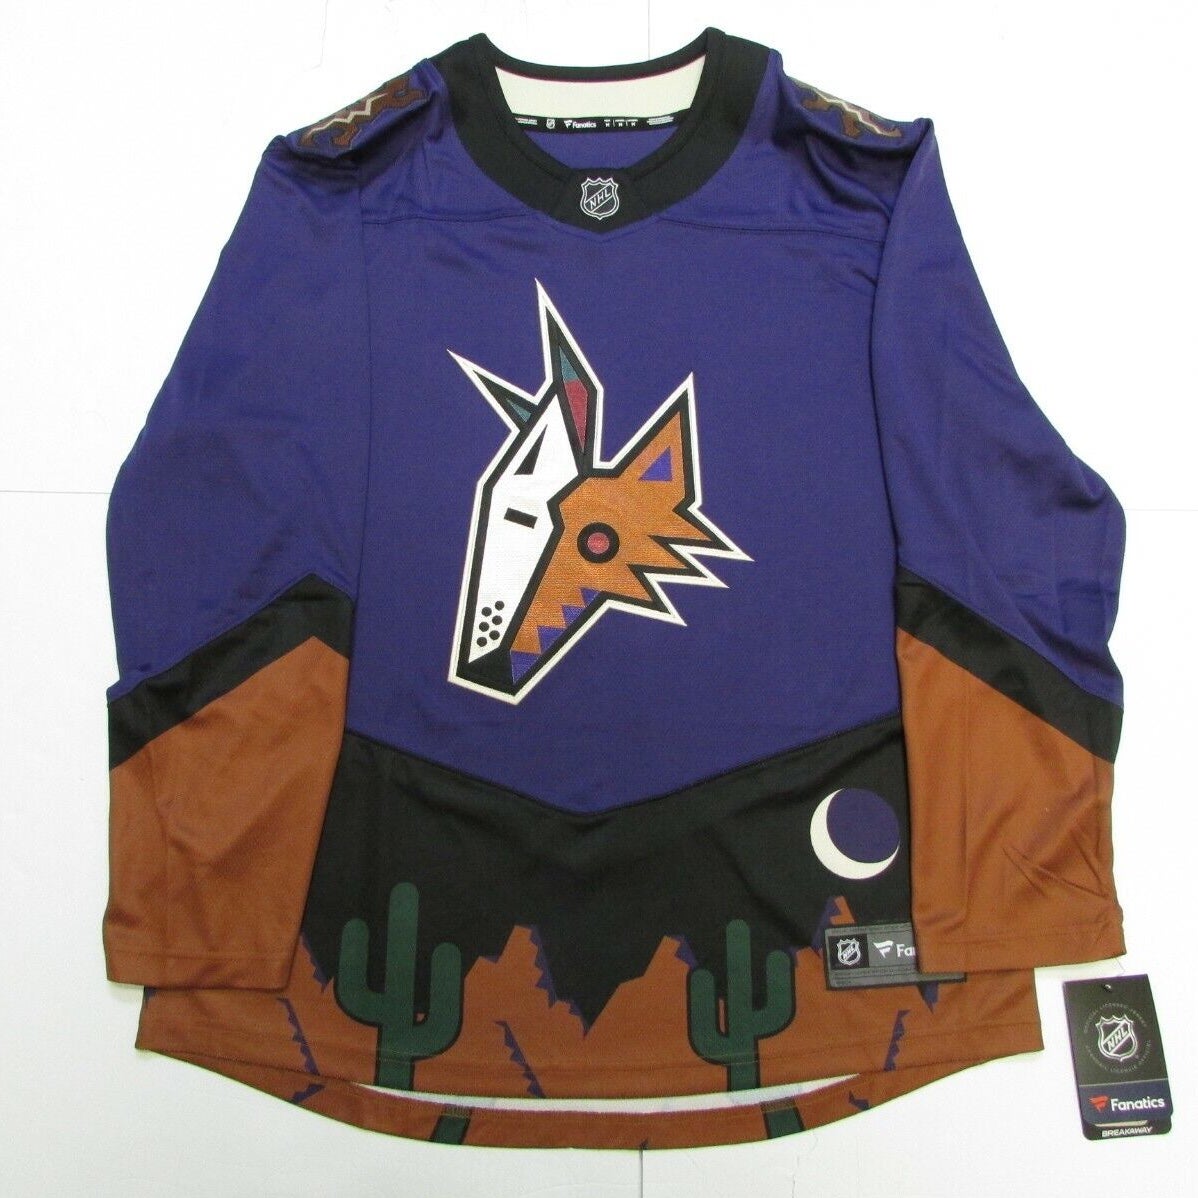 Arizona Coyotes alternate jersey concept. : r/Coyotes